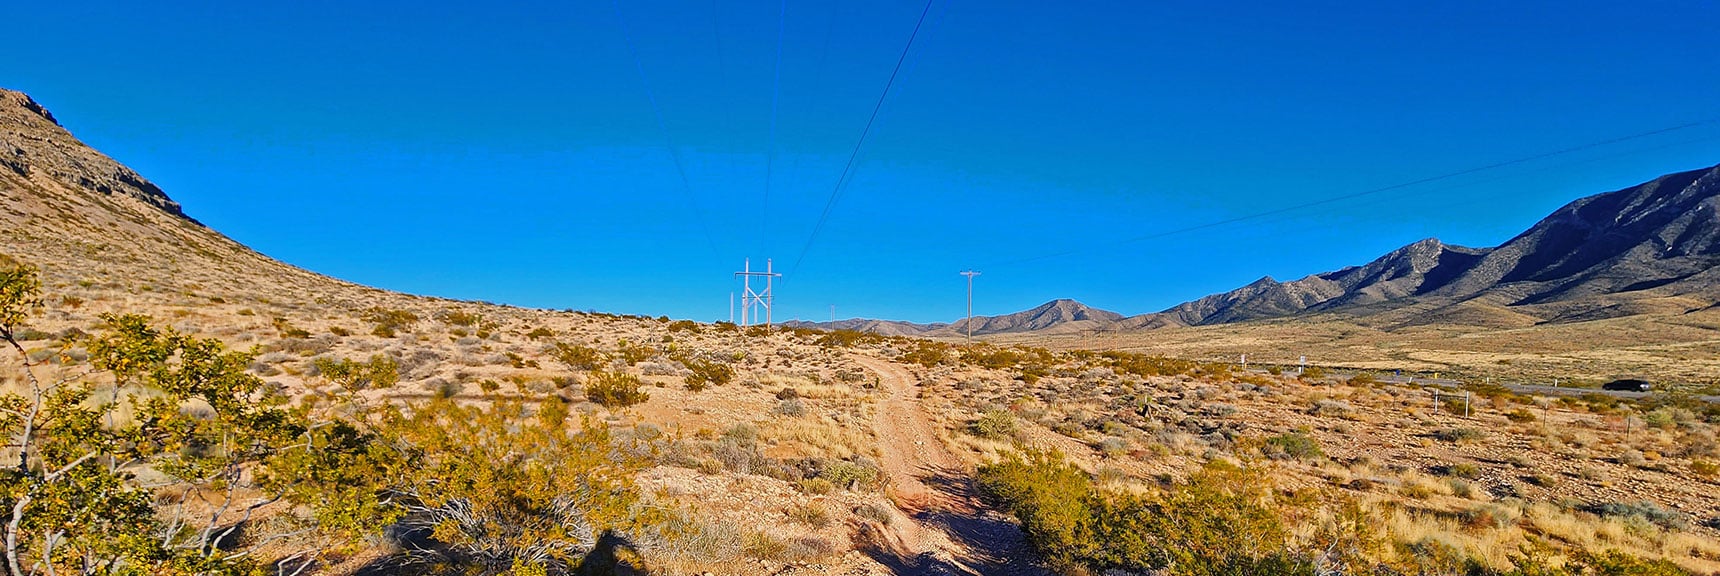 Streamlined Return Trip. Now on Powerline Maintenance Road, South Side of Bluff. | Landmark Bluff | Lovell Canyon, Nevada